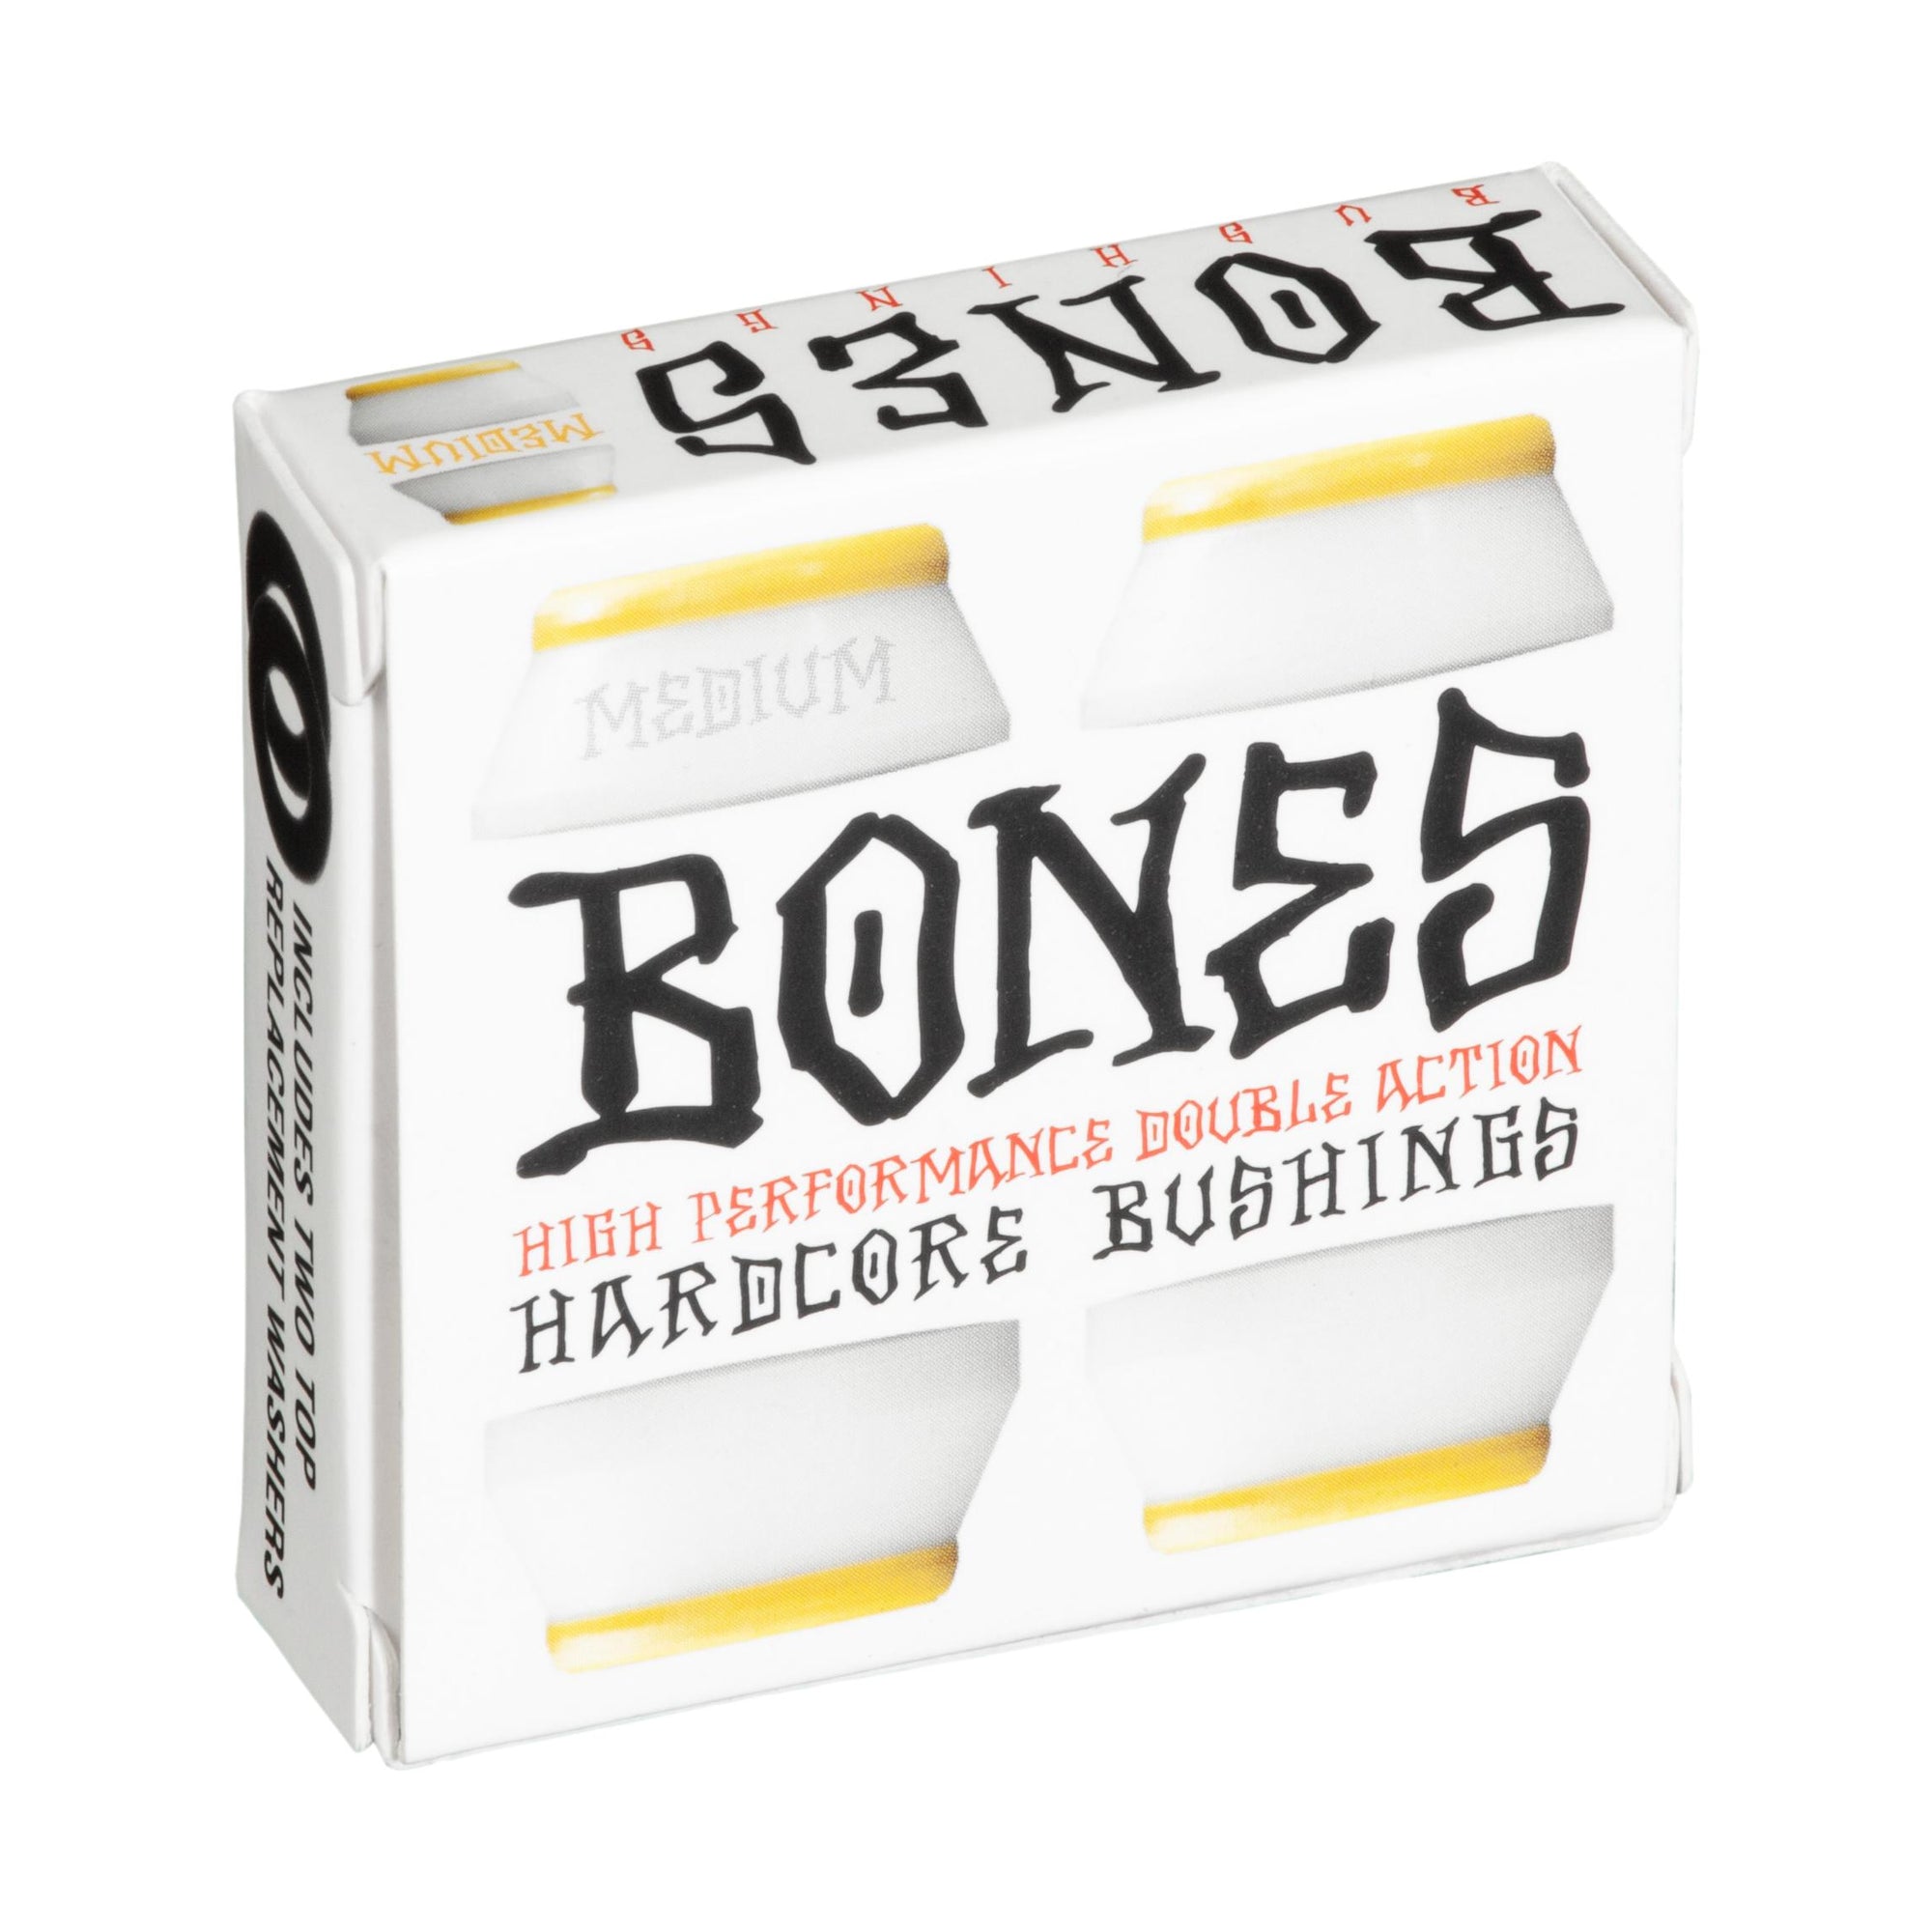 Bones Hardcore Bushings - Medium White - Venue Skateboards